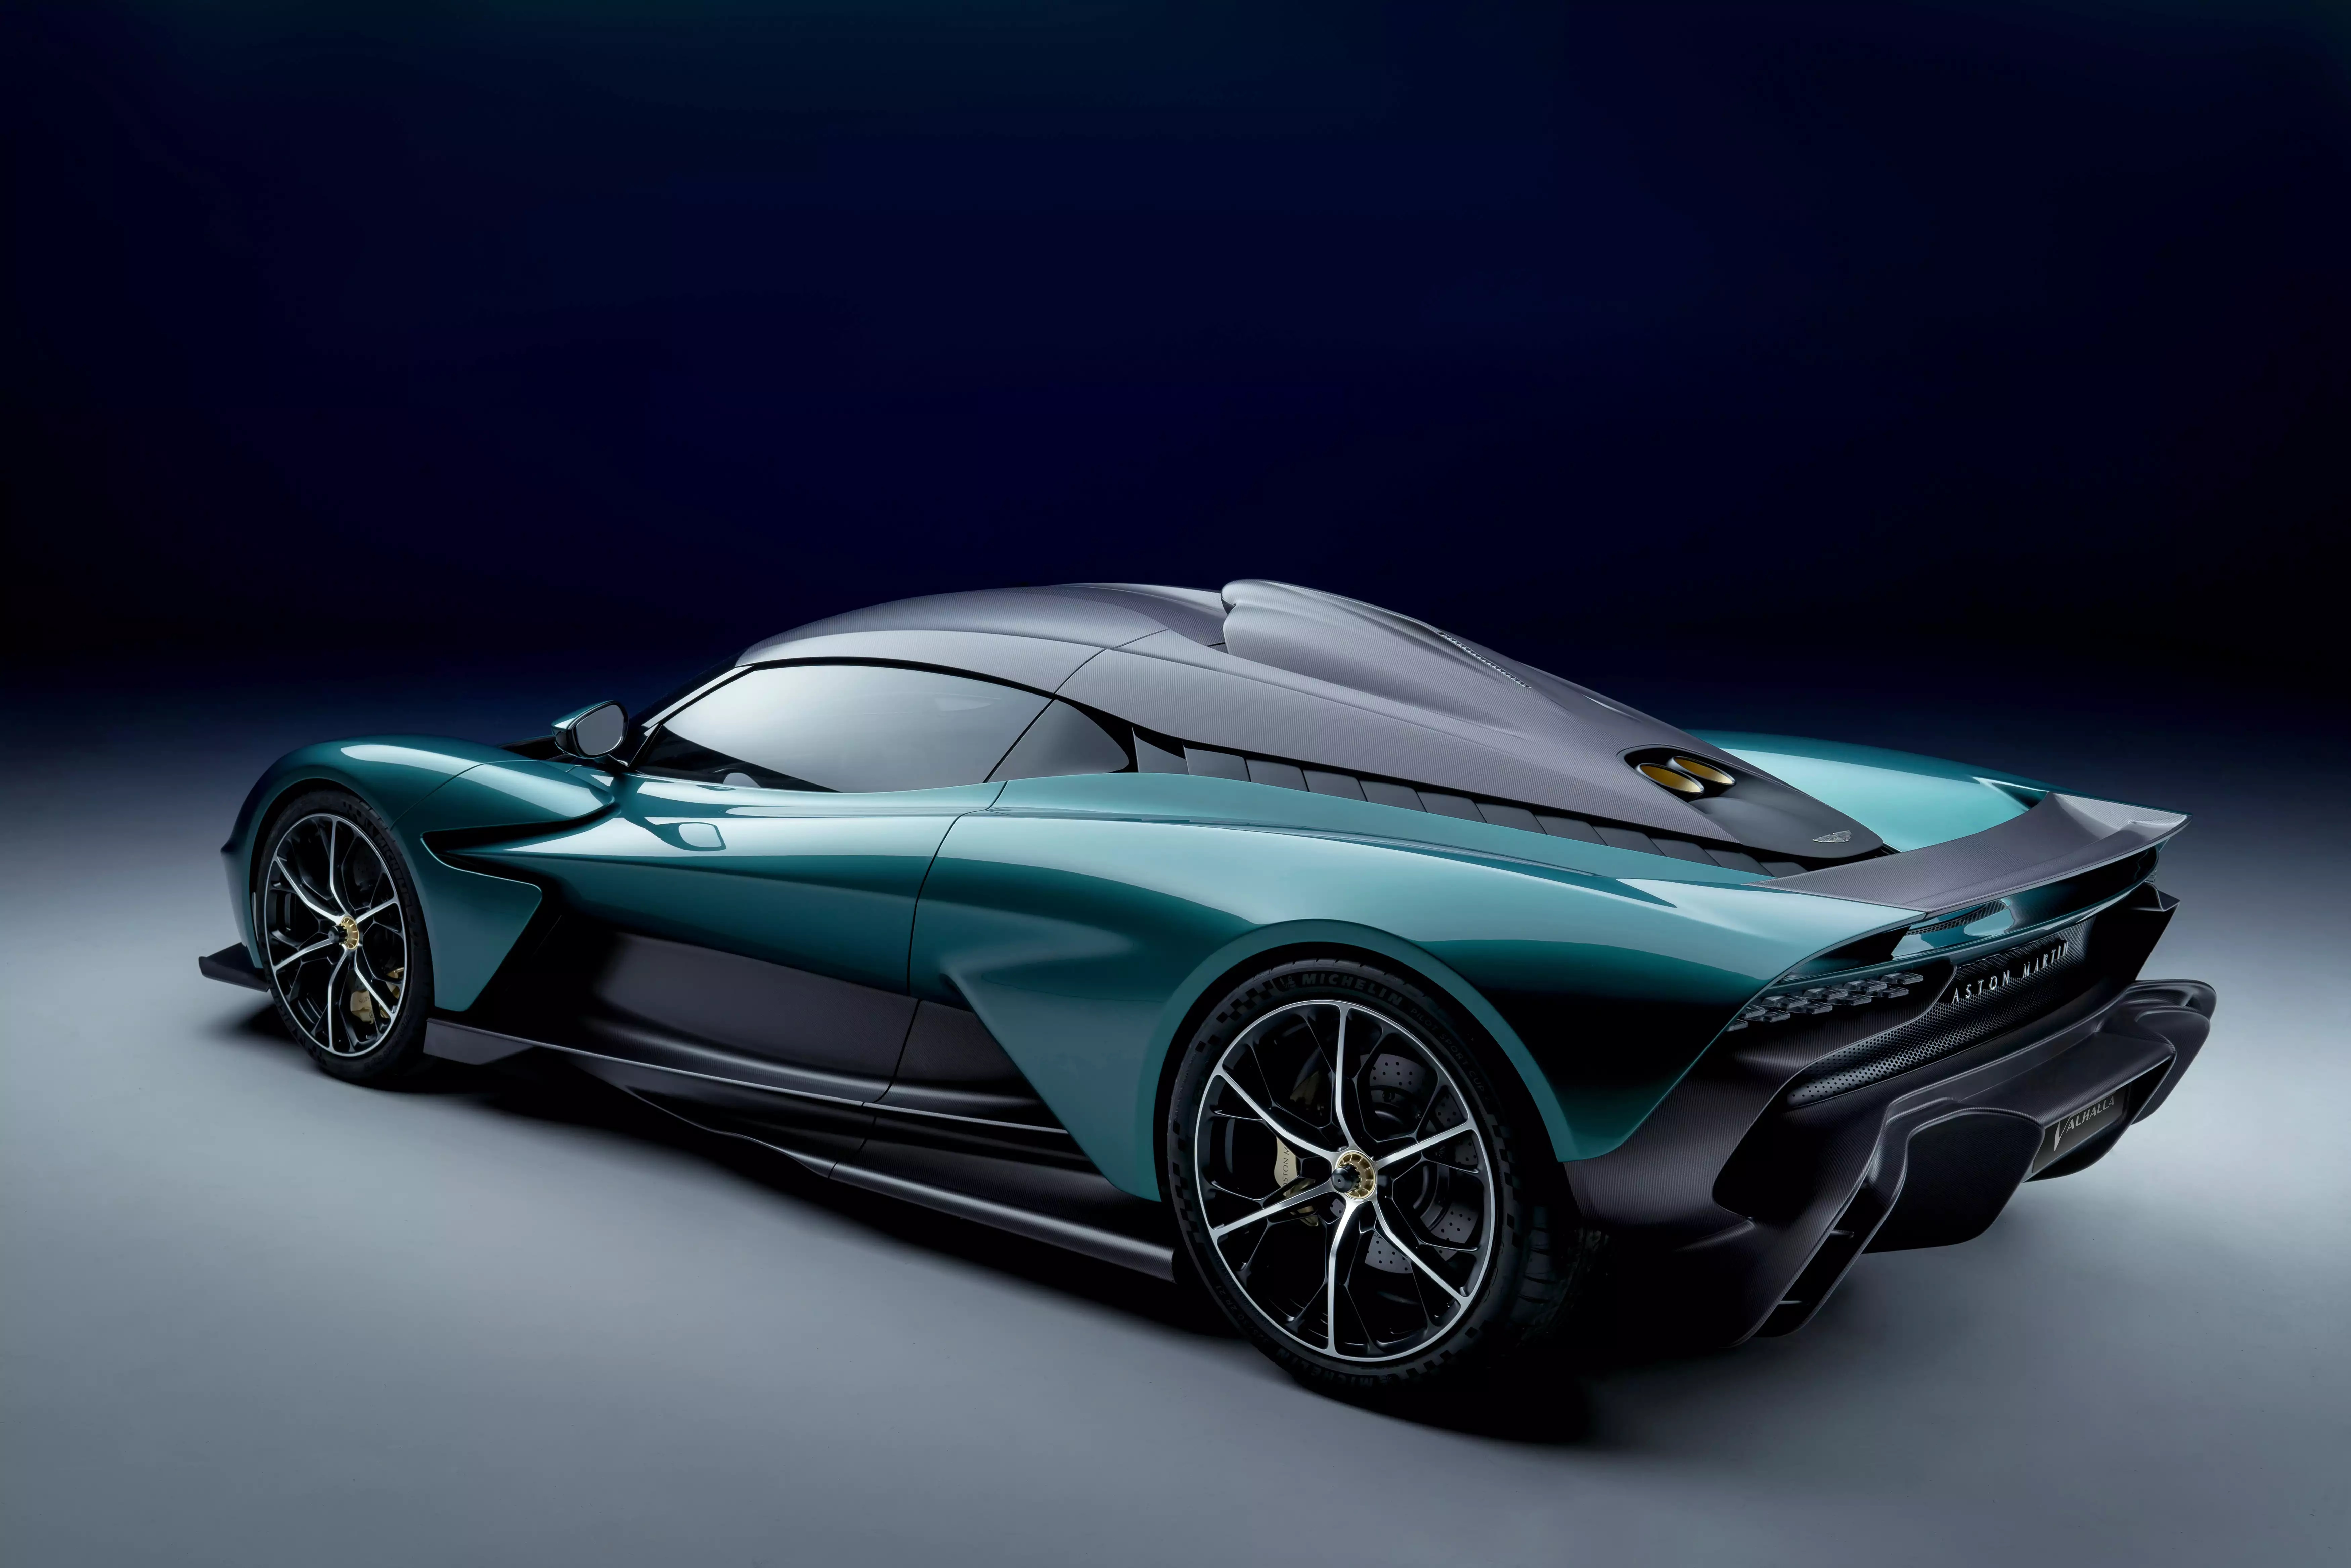 The Ultimate Driving Machine: The Aston Martin Valhalla